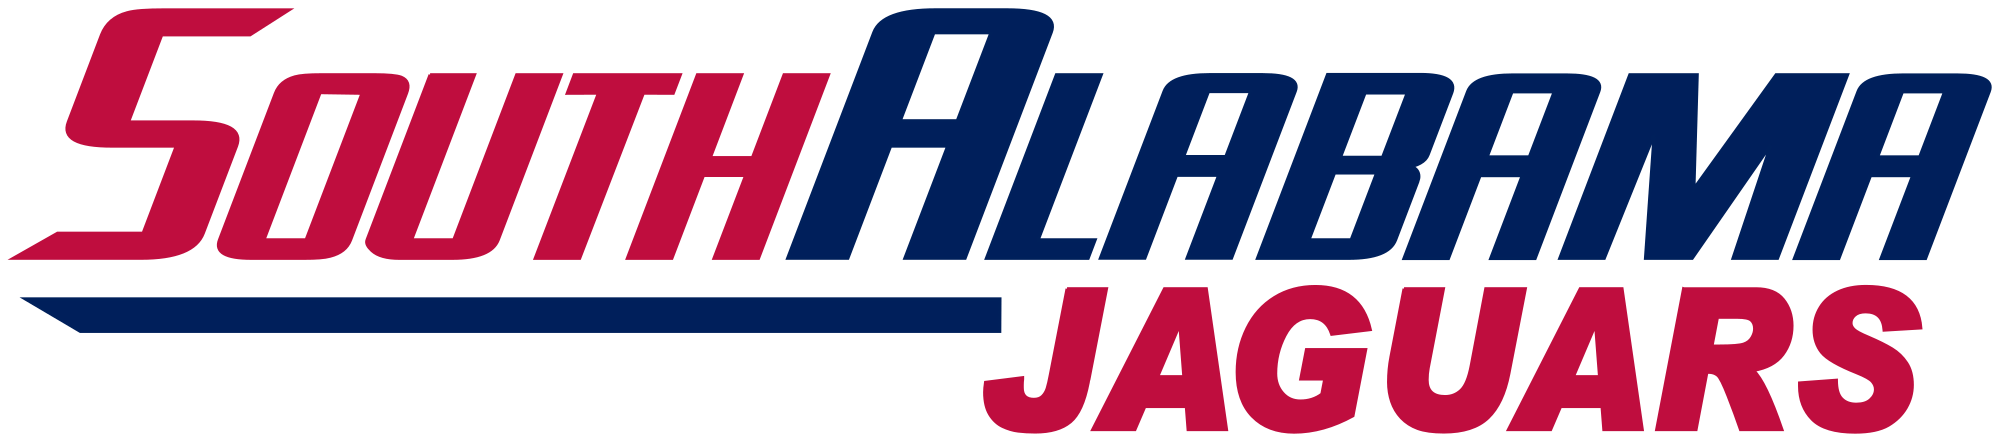 University of South Alabama Logo - South Alabama Jaguars wordmark.svg